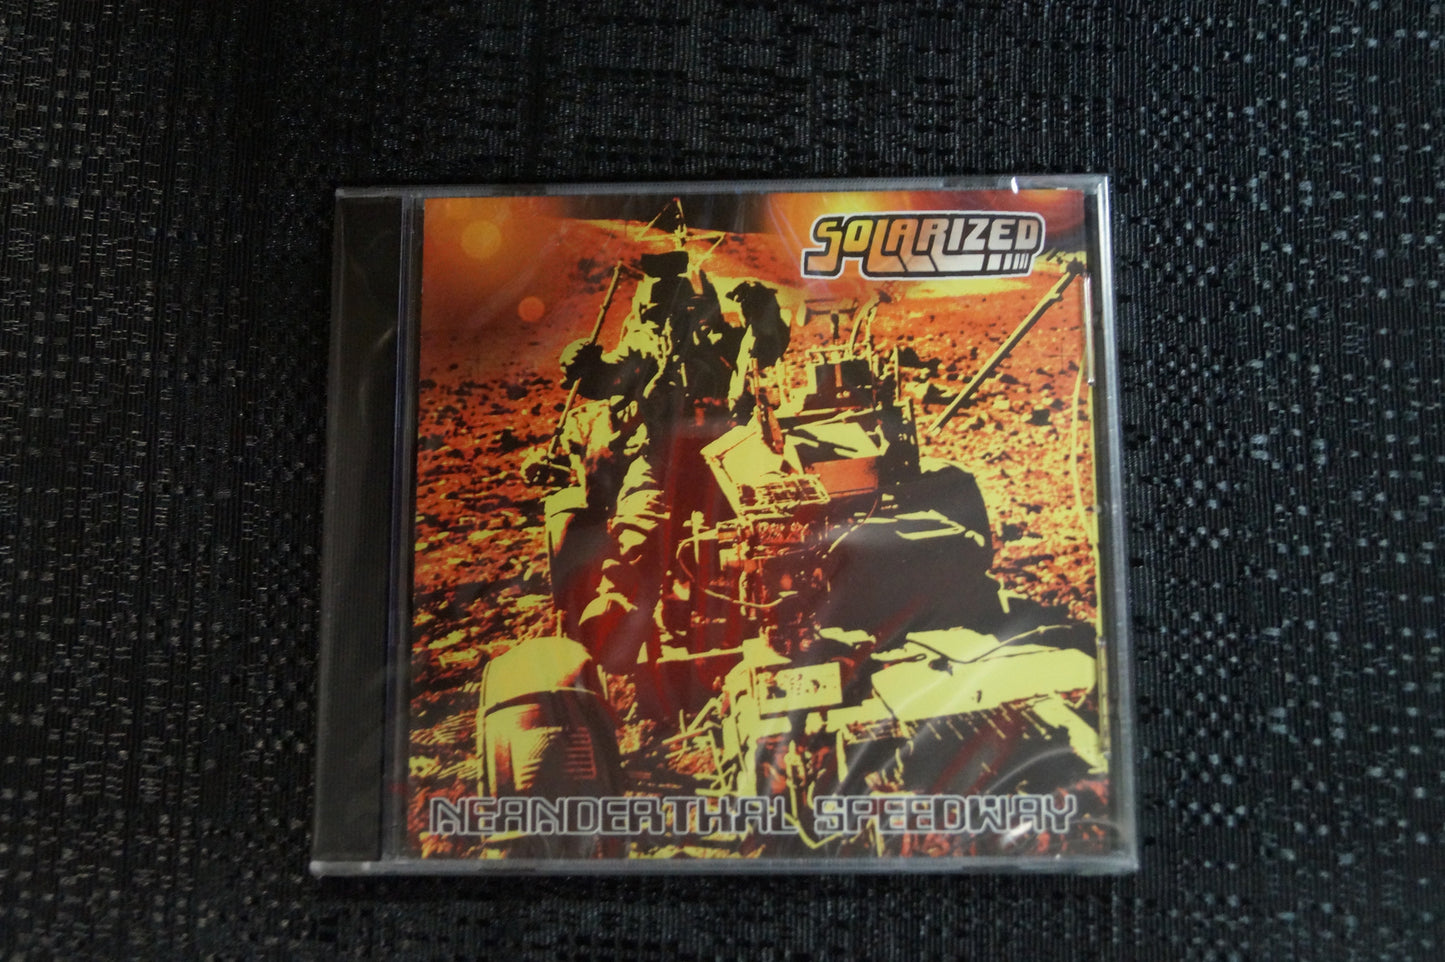 Solarized "Neanderthal Speedway" 1999 CD Art By Kozik